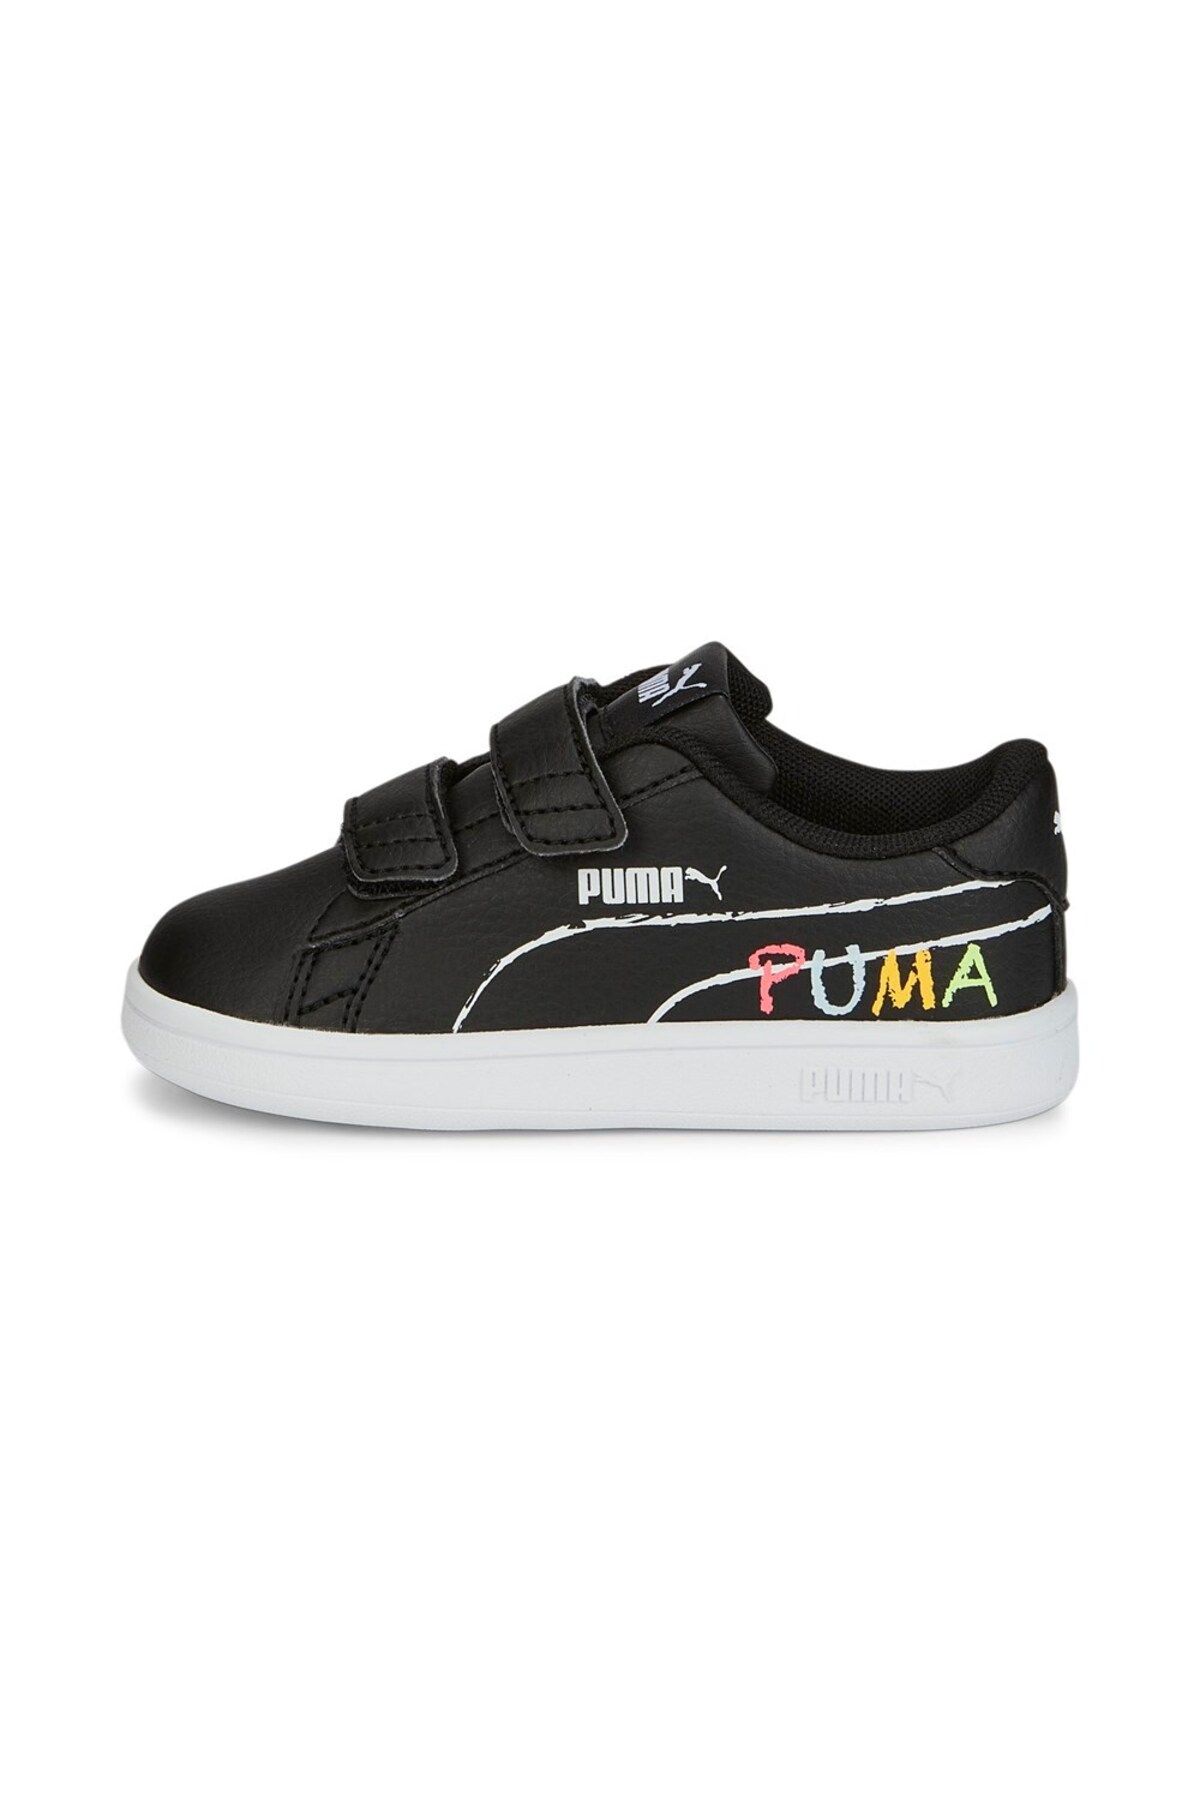 Puma Smash V2 Home School V Inf Bebek Sneaker